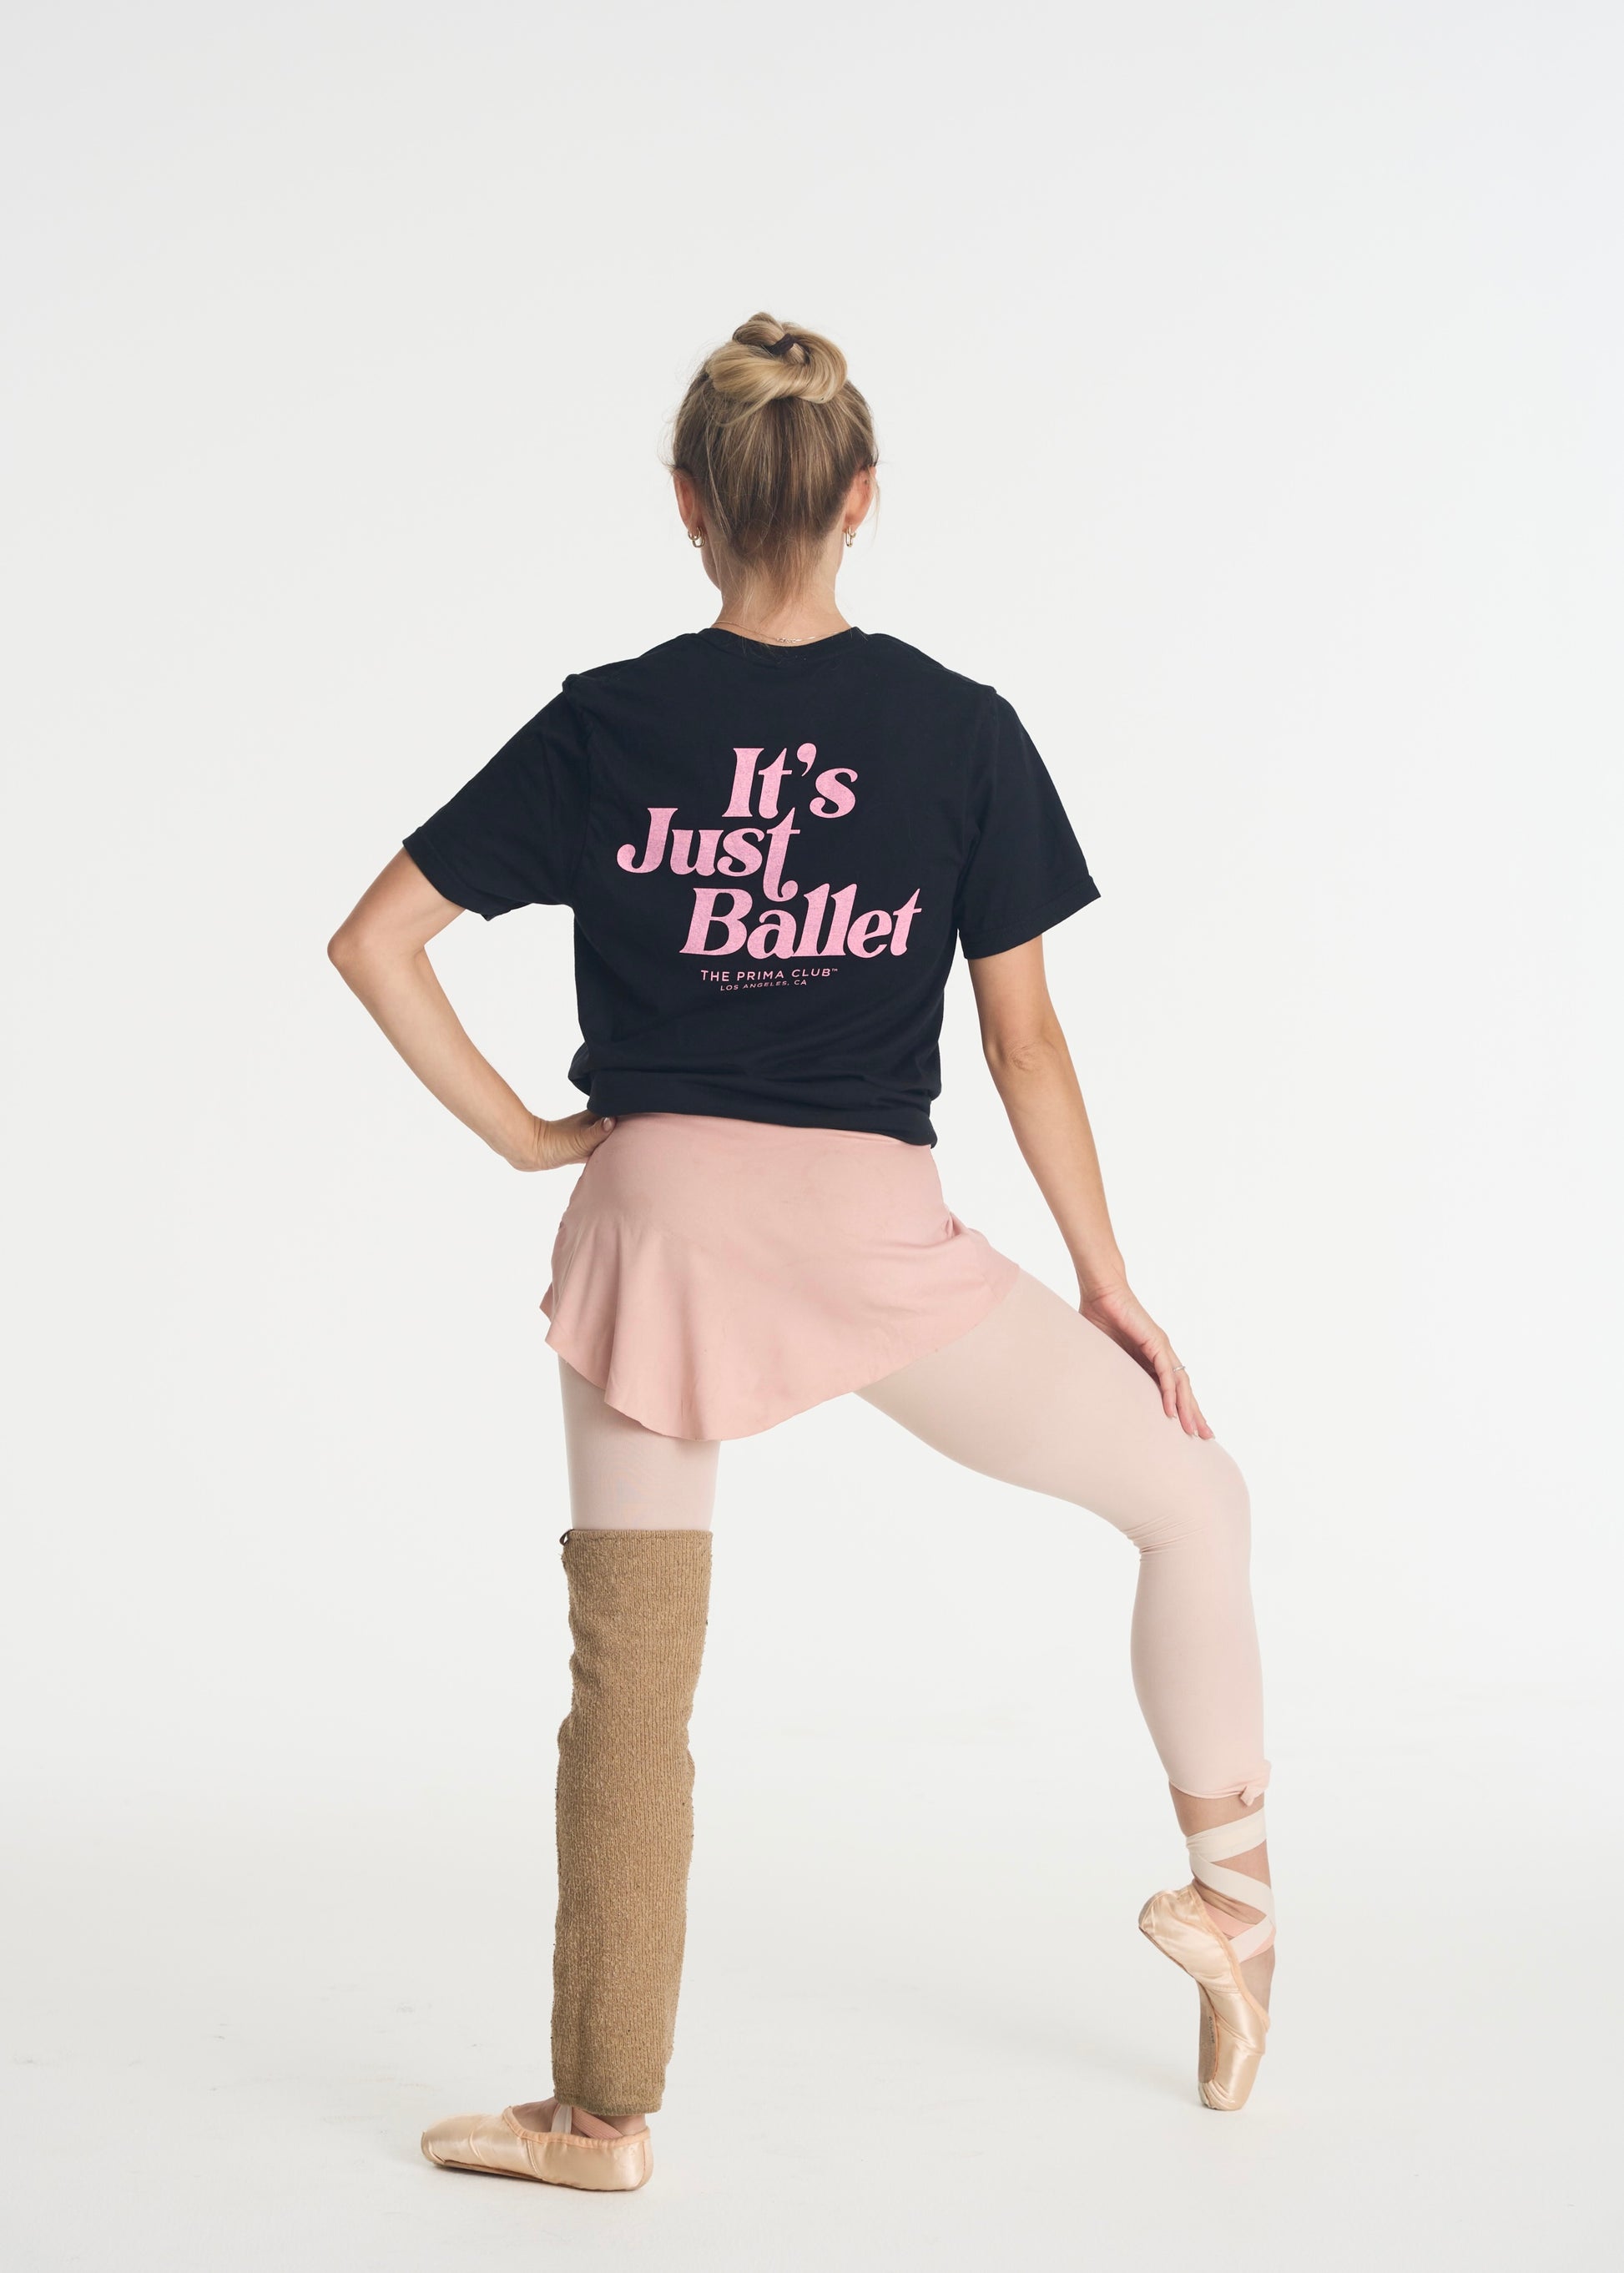 model facing away wearing black t-shirt that says Its Just Ballet.